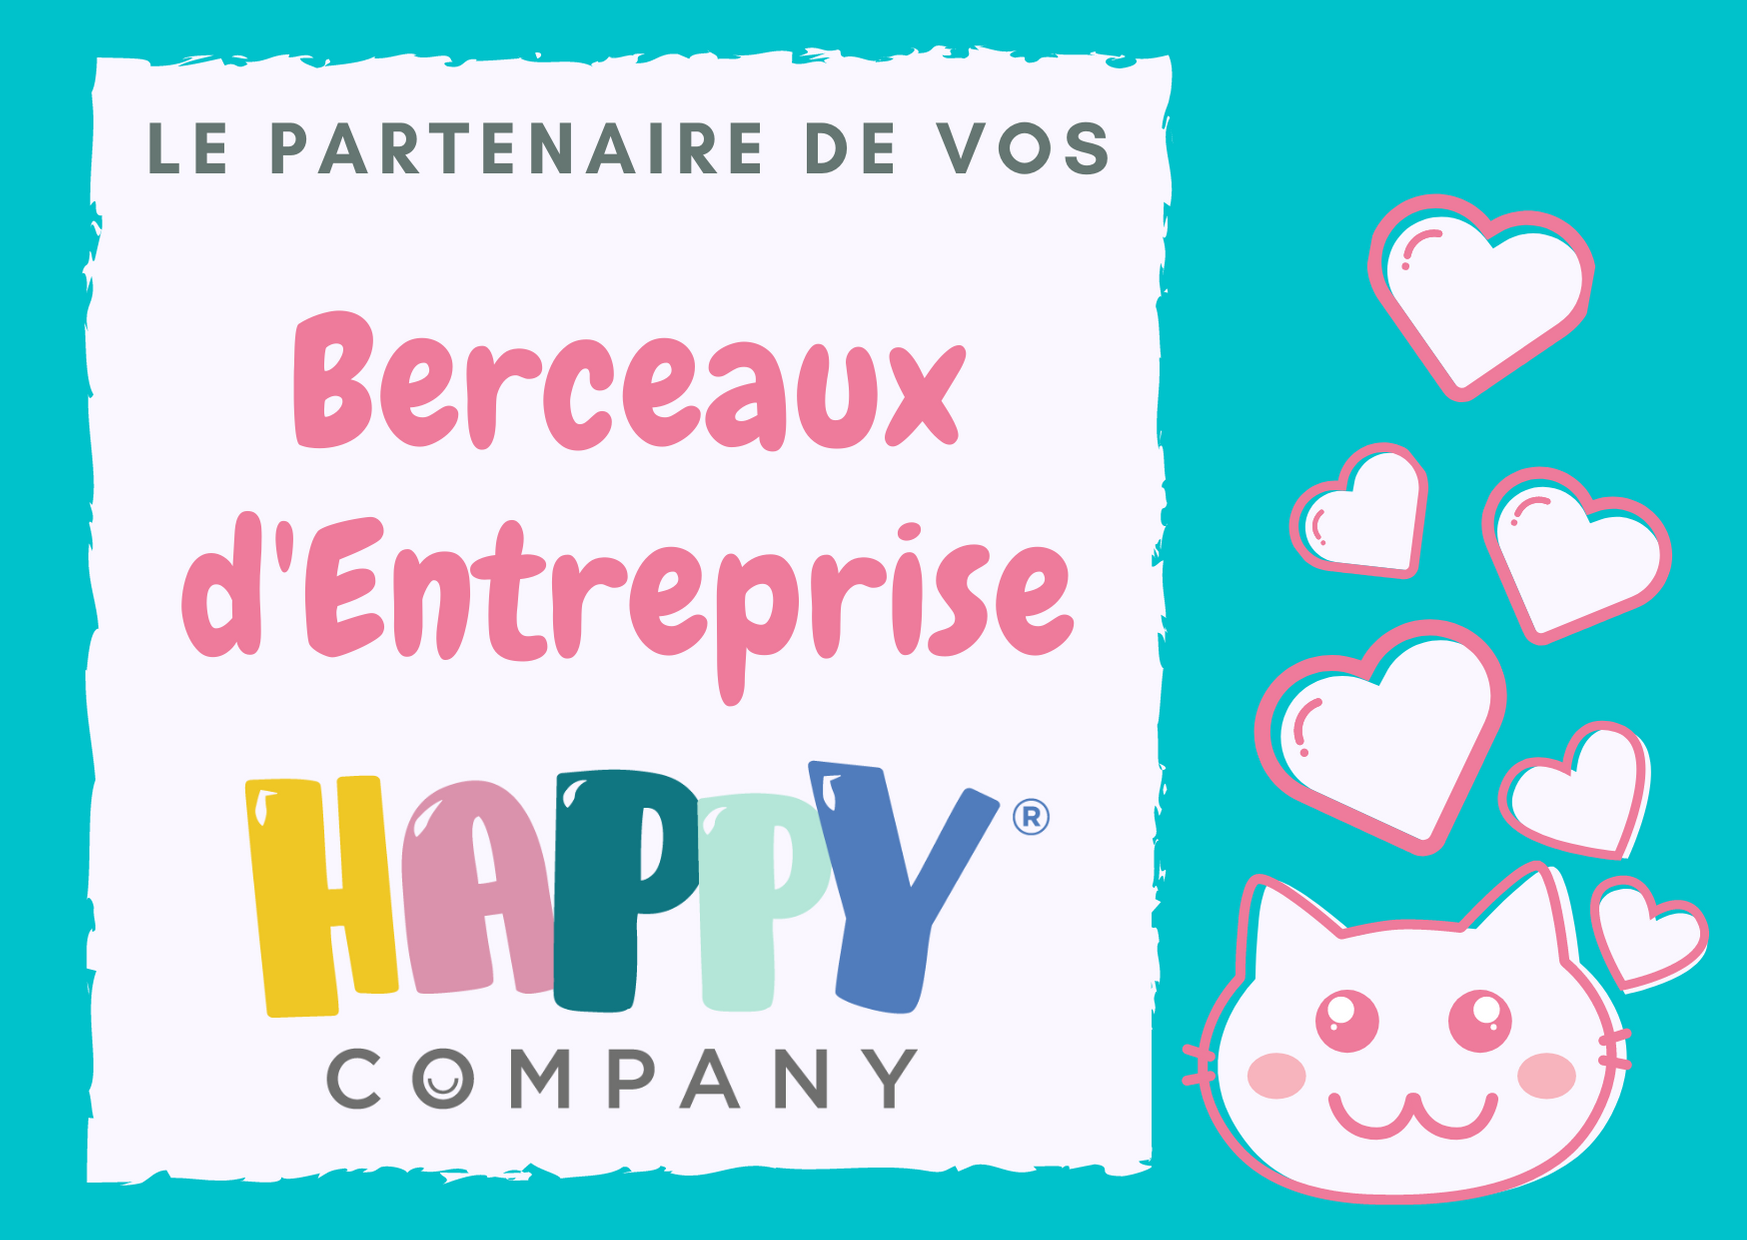 Partenariat avec Happy Company